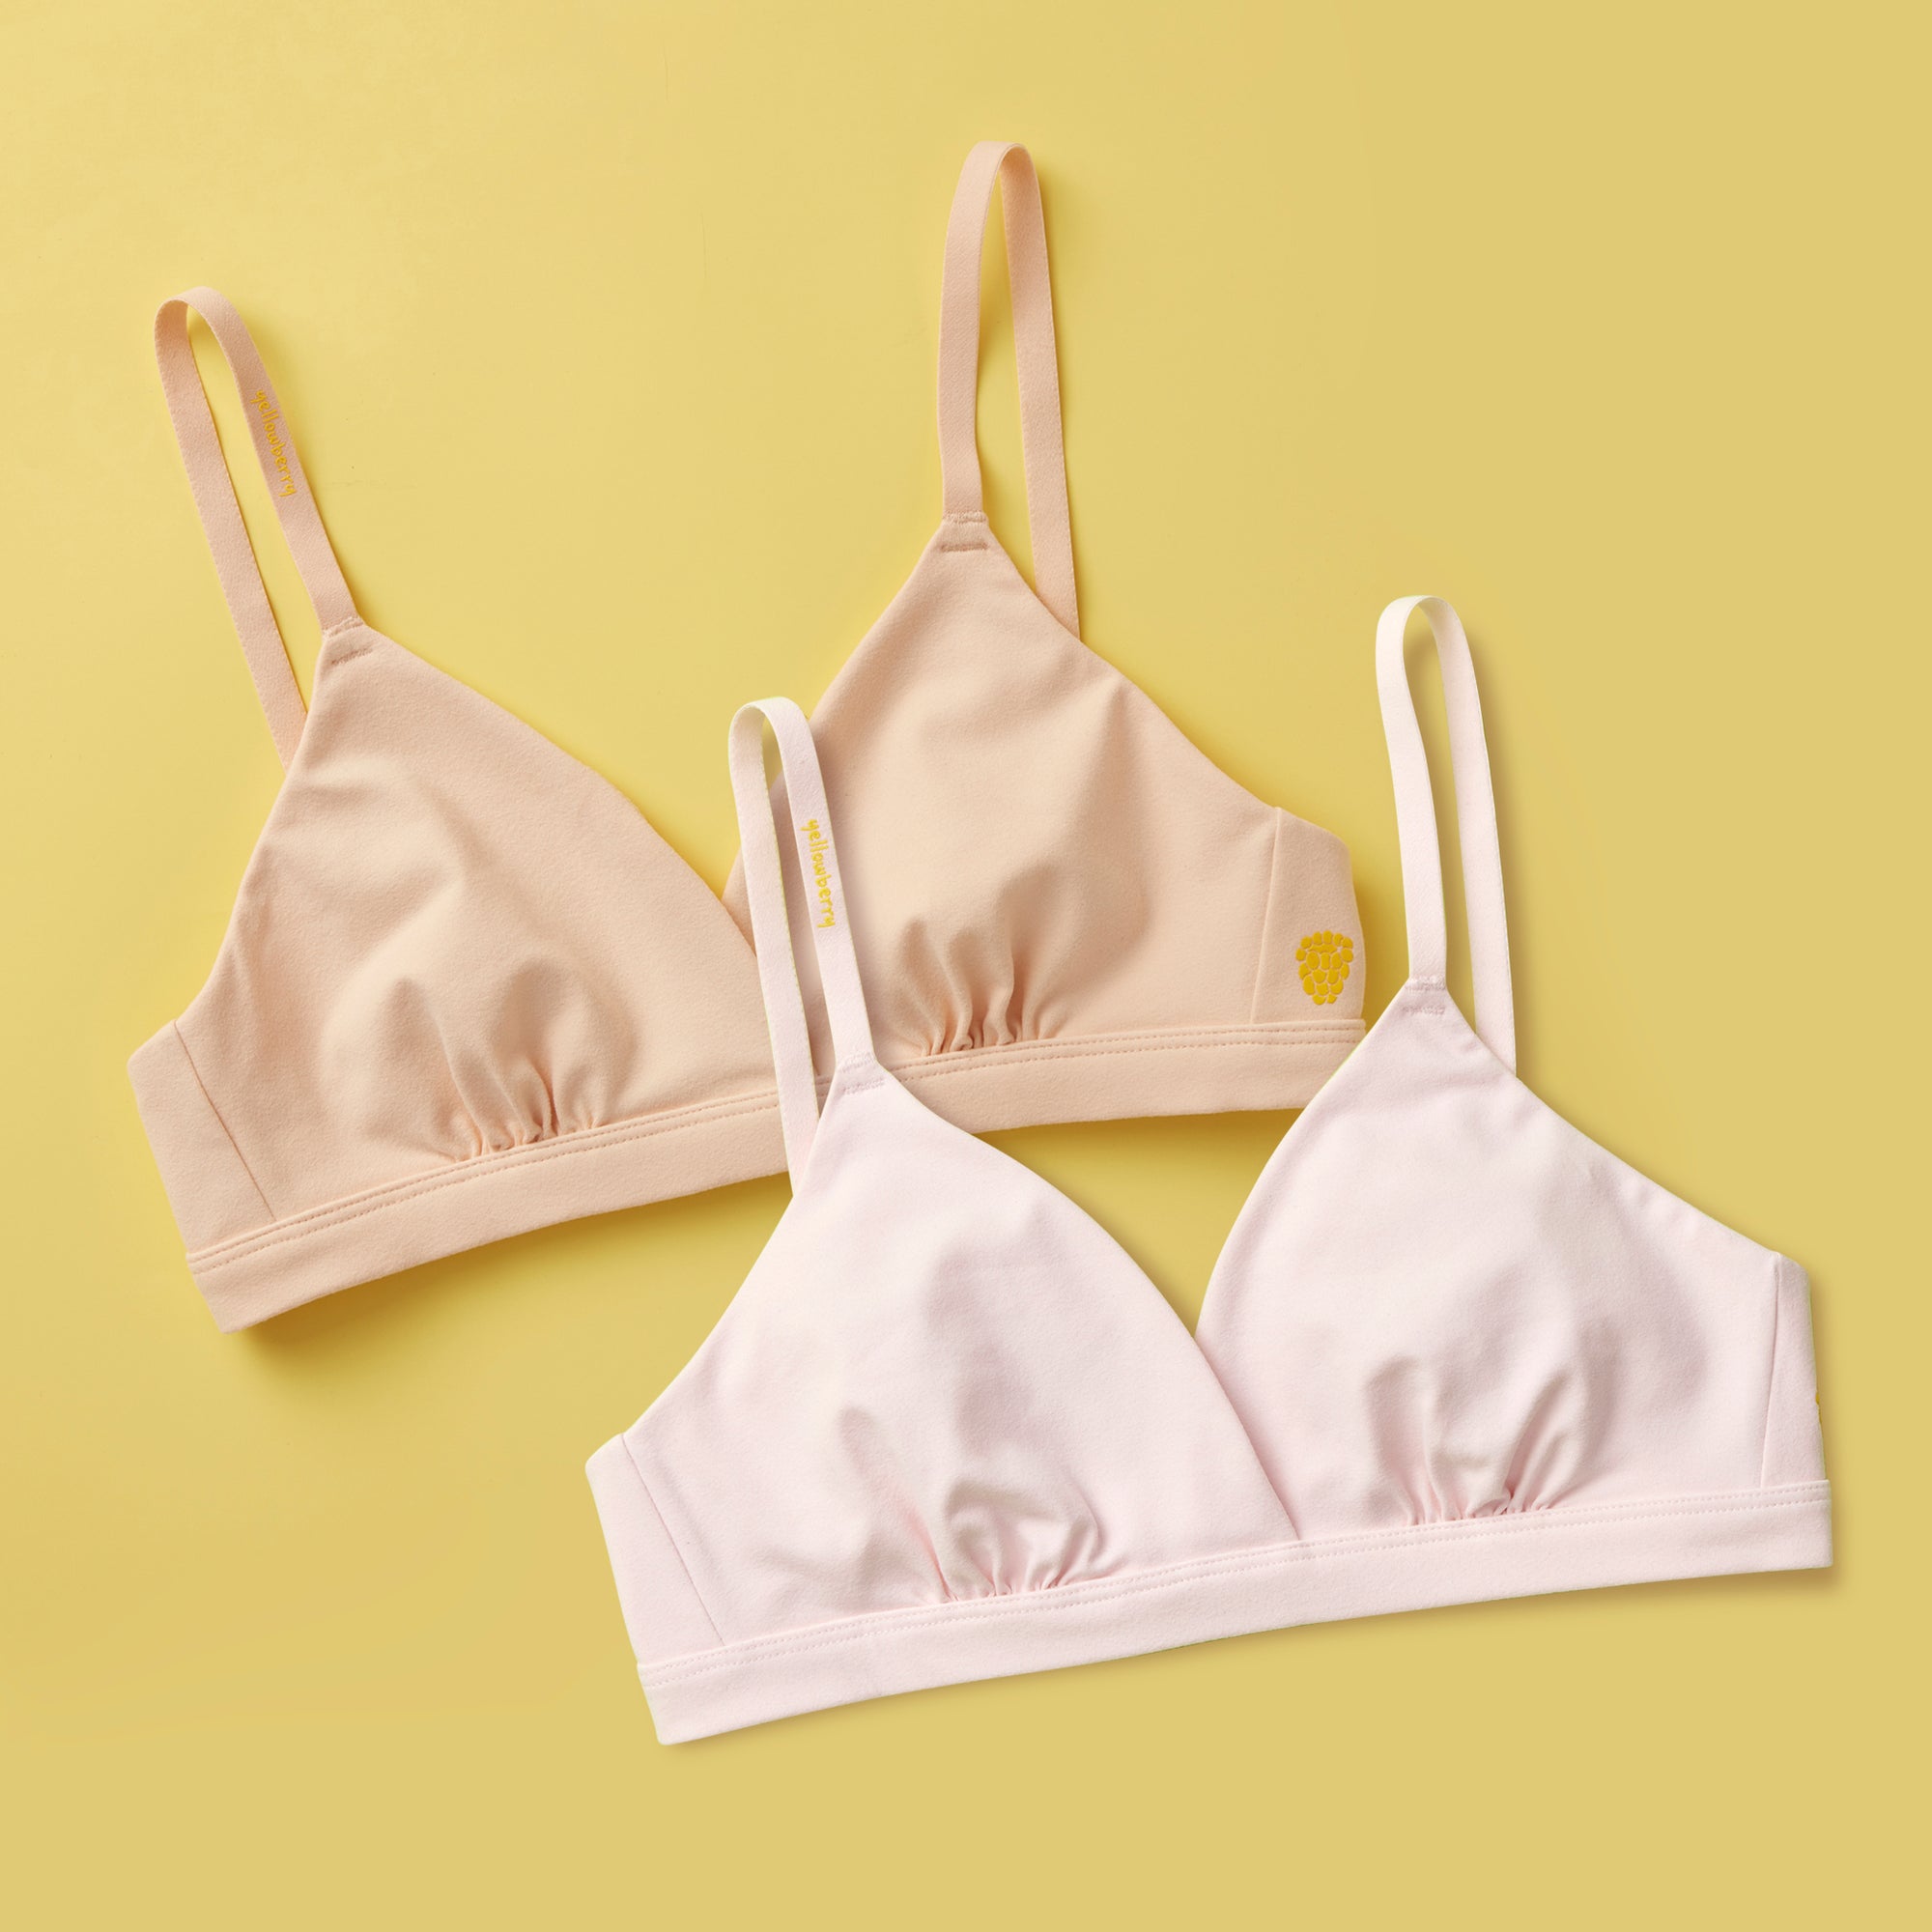  Yellowberry Simple Cotton Bikini Underwear Bundle 6PK Best Soft  Panty for Girls (XS, Kit): Clothing, Shoes & Jewelry